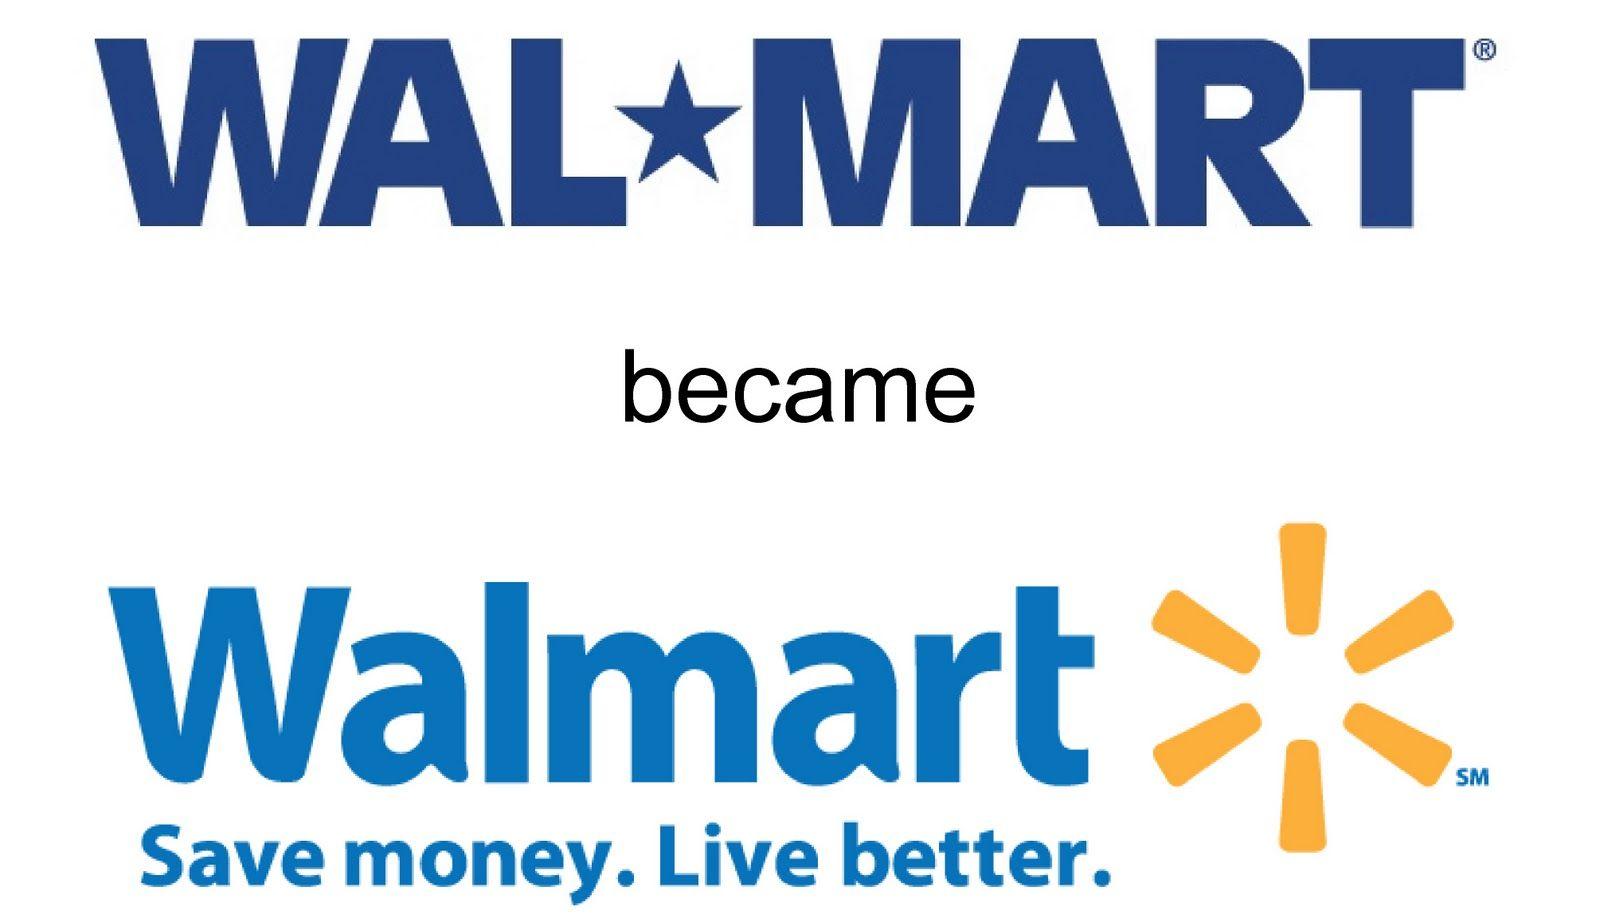 Walamrt Logo - Free Walmart Cliparts, Download Free Clip Art, Free Clip Art on ...